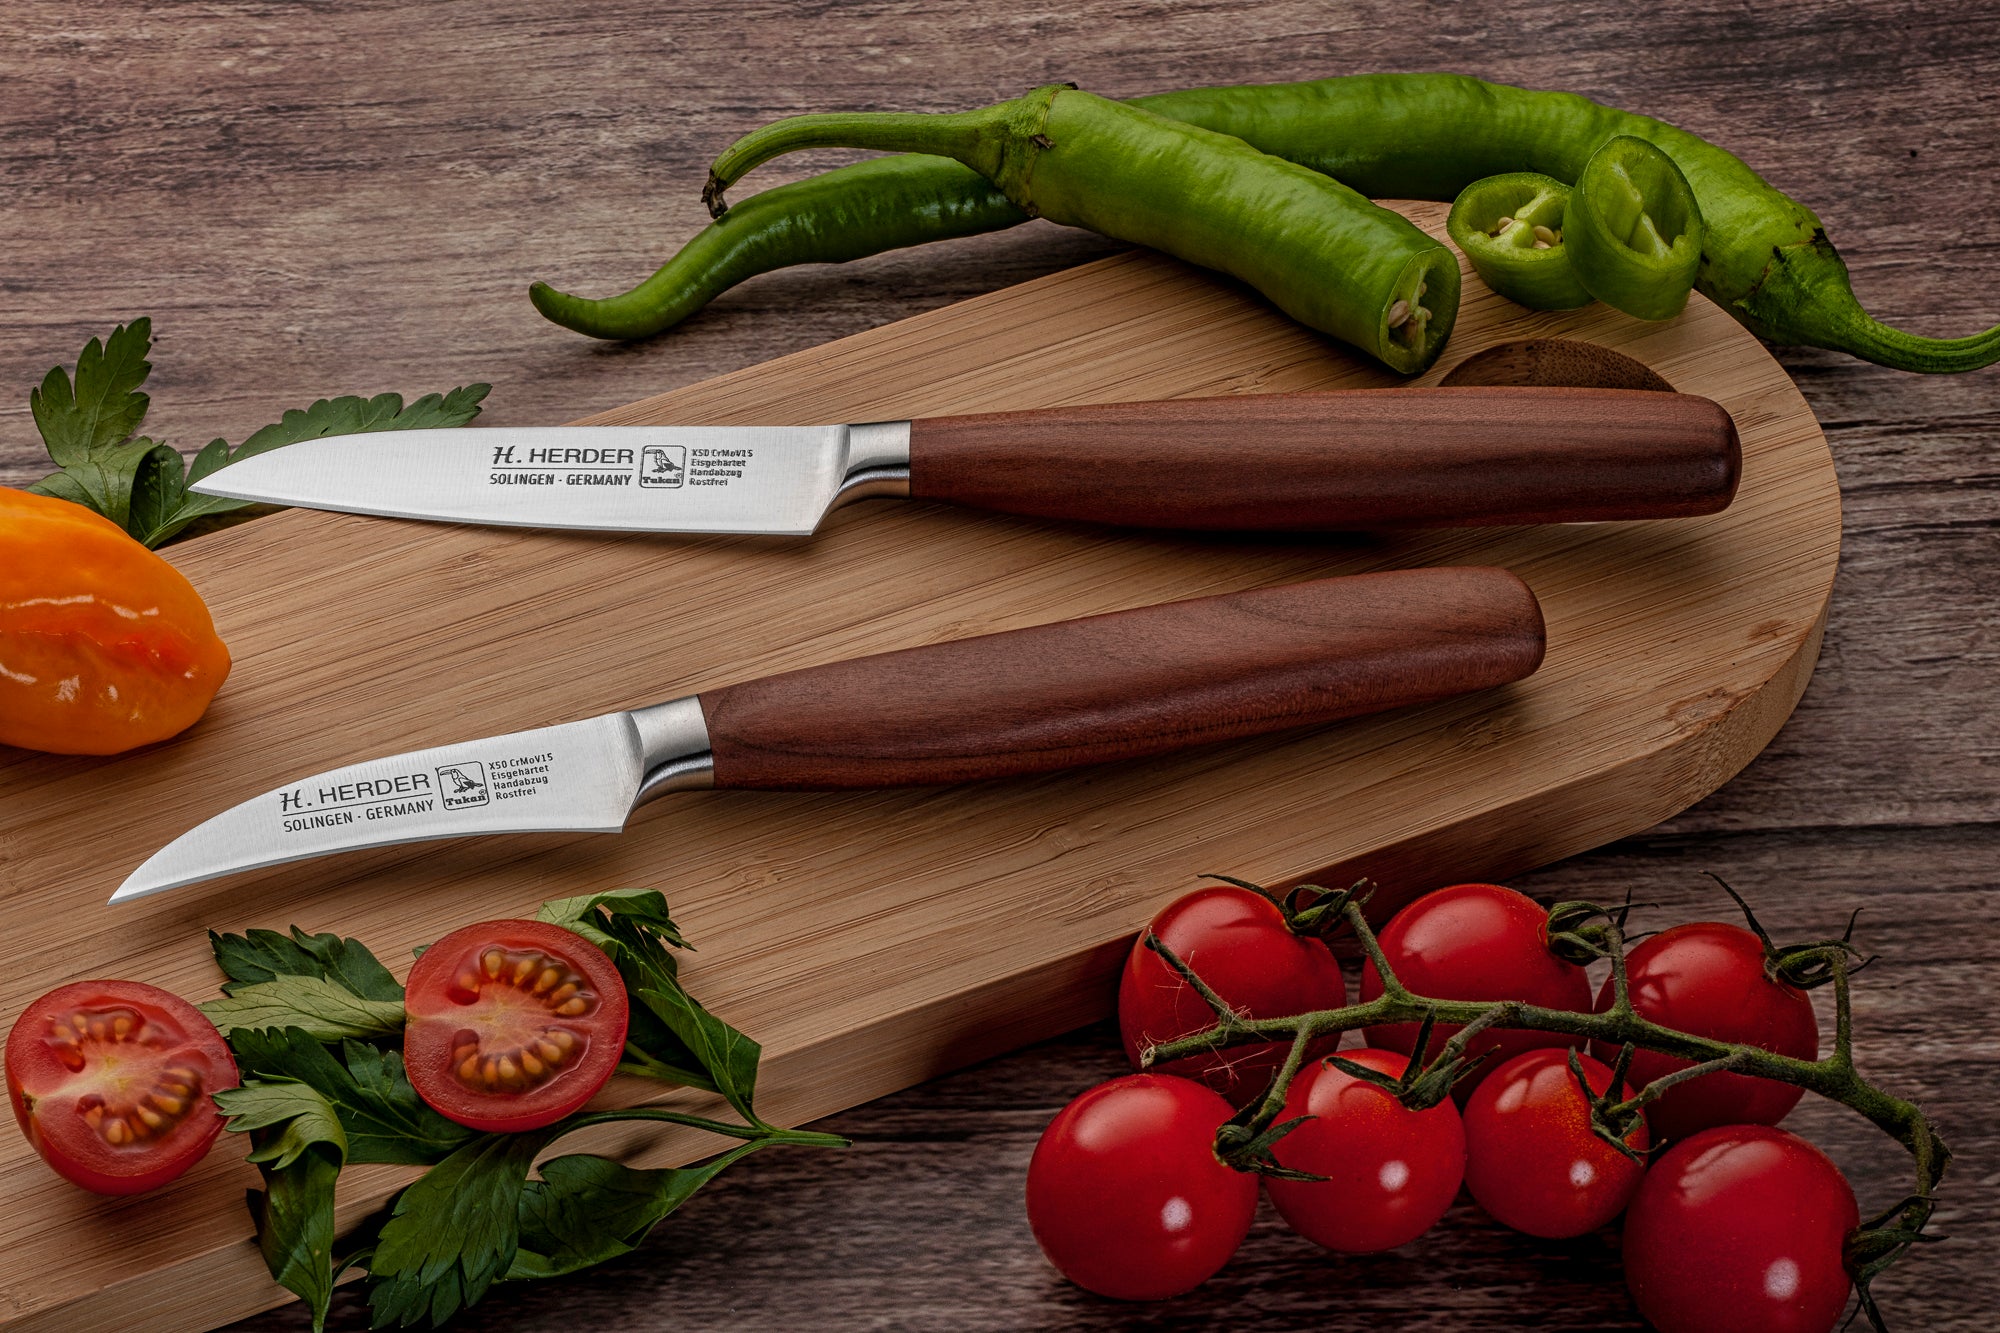 Cuchillo para verduras Eterno, madera de ciruelo, longitud de la hoja 9cm, forjado